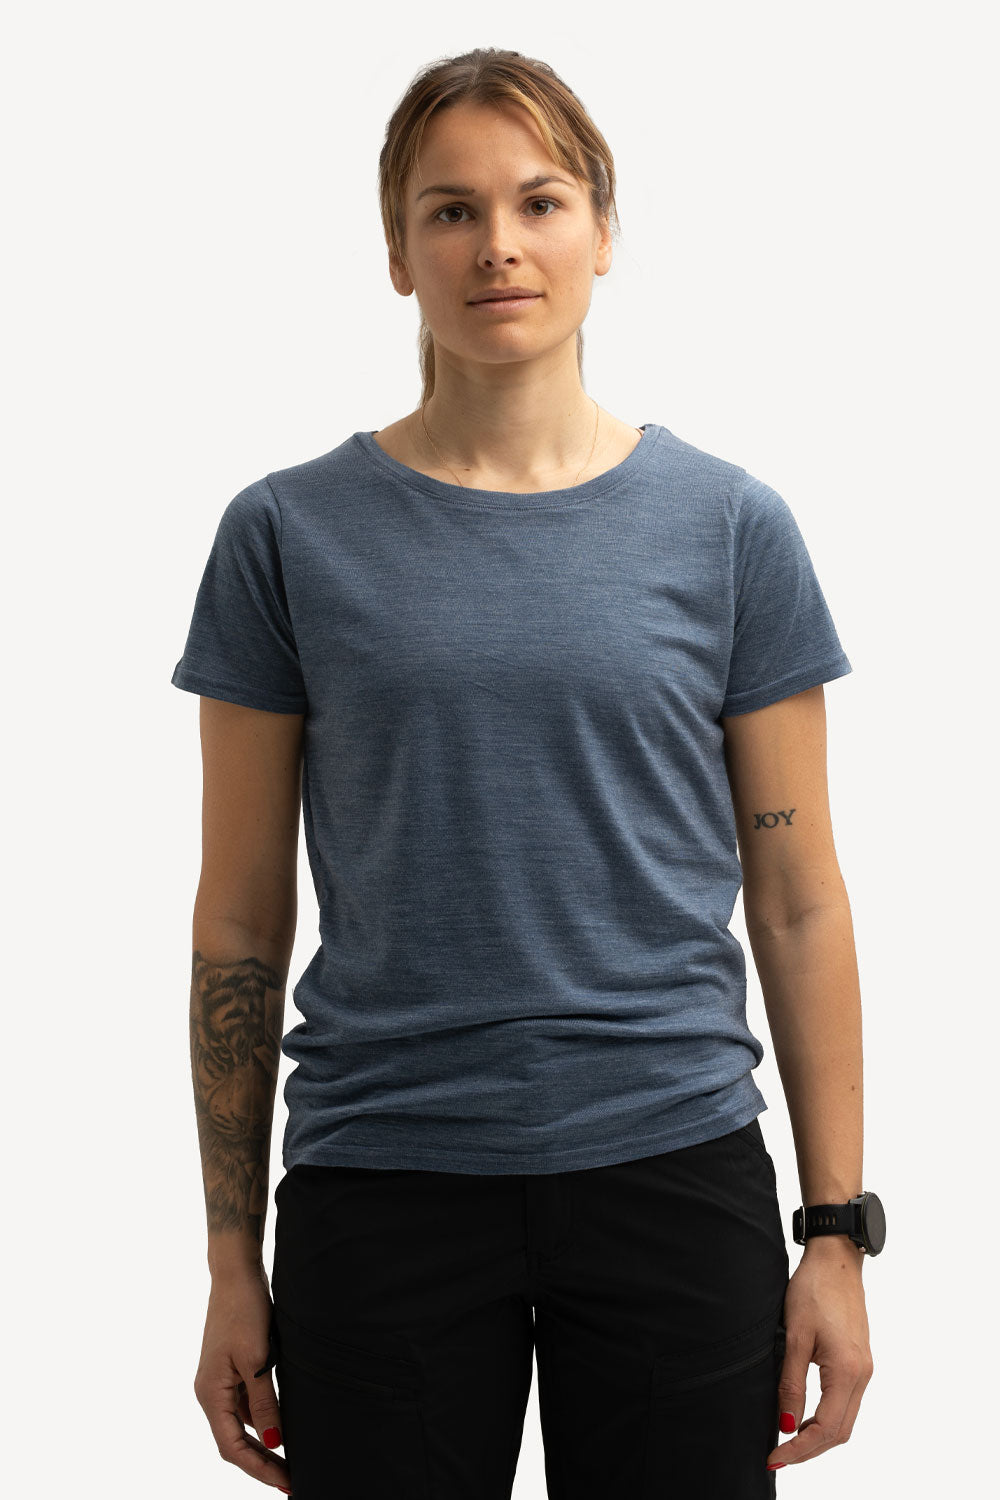 Women's lightweight Merino wool & Tencel t-shirt.